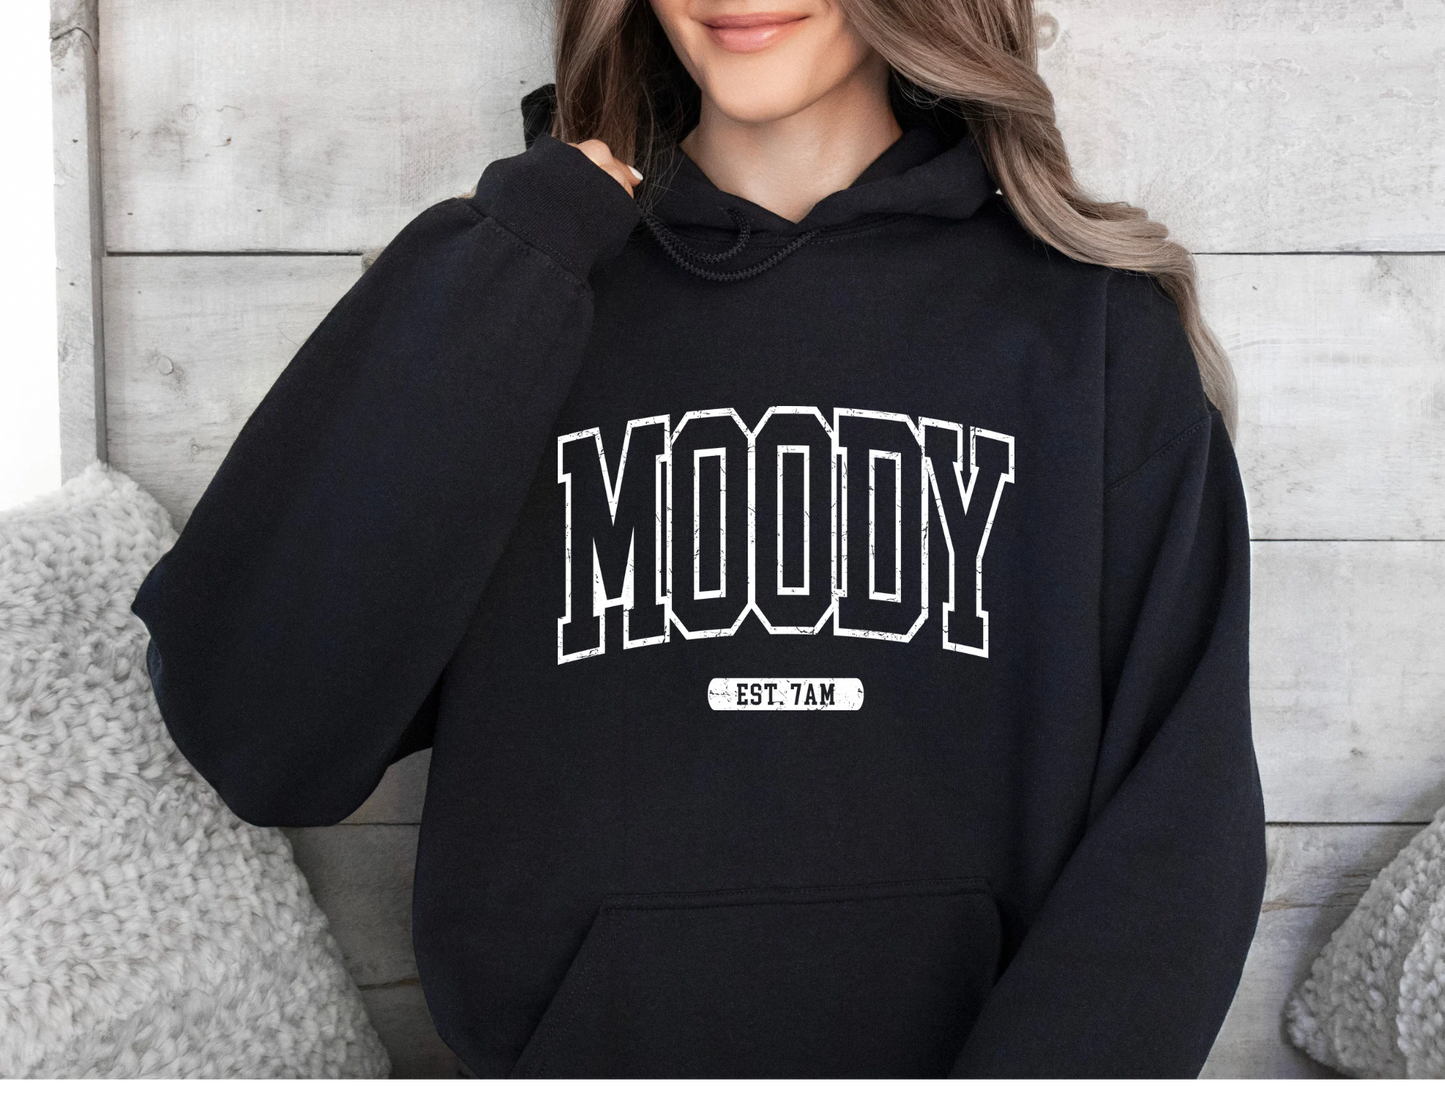 Moody 7am Sweatshirt